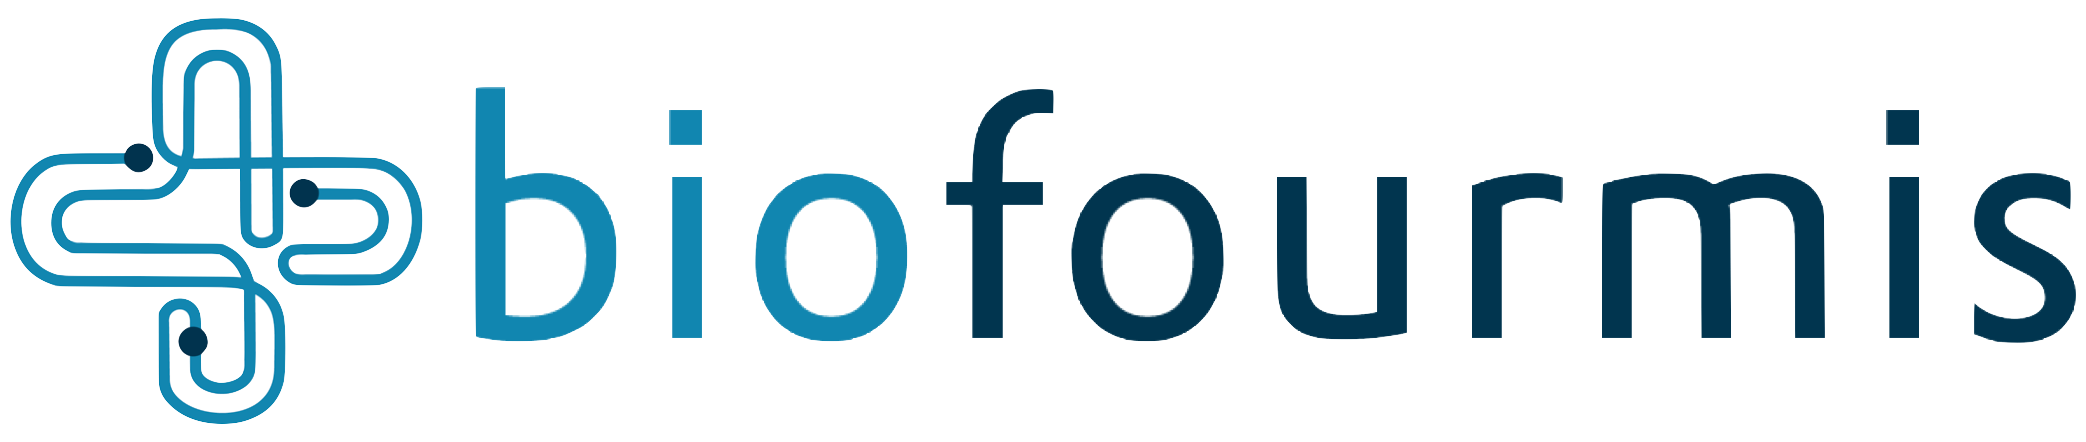 Vision Fund investment portfolio company Biofourmis's logo